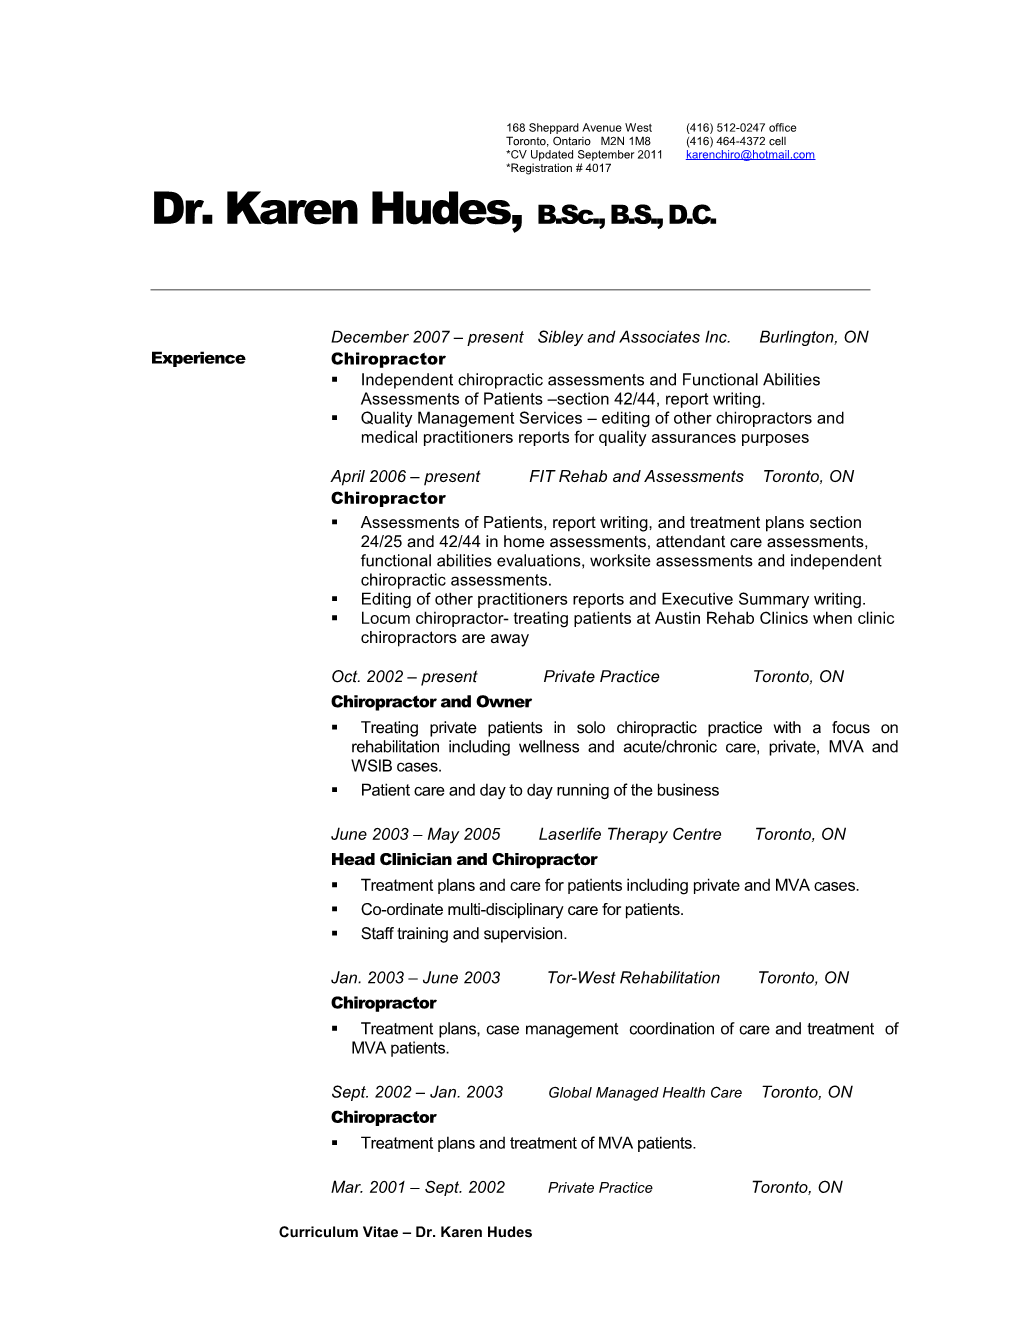 Dr. Karen Hudes, B.Sc., B.S., D.C